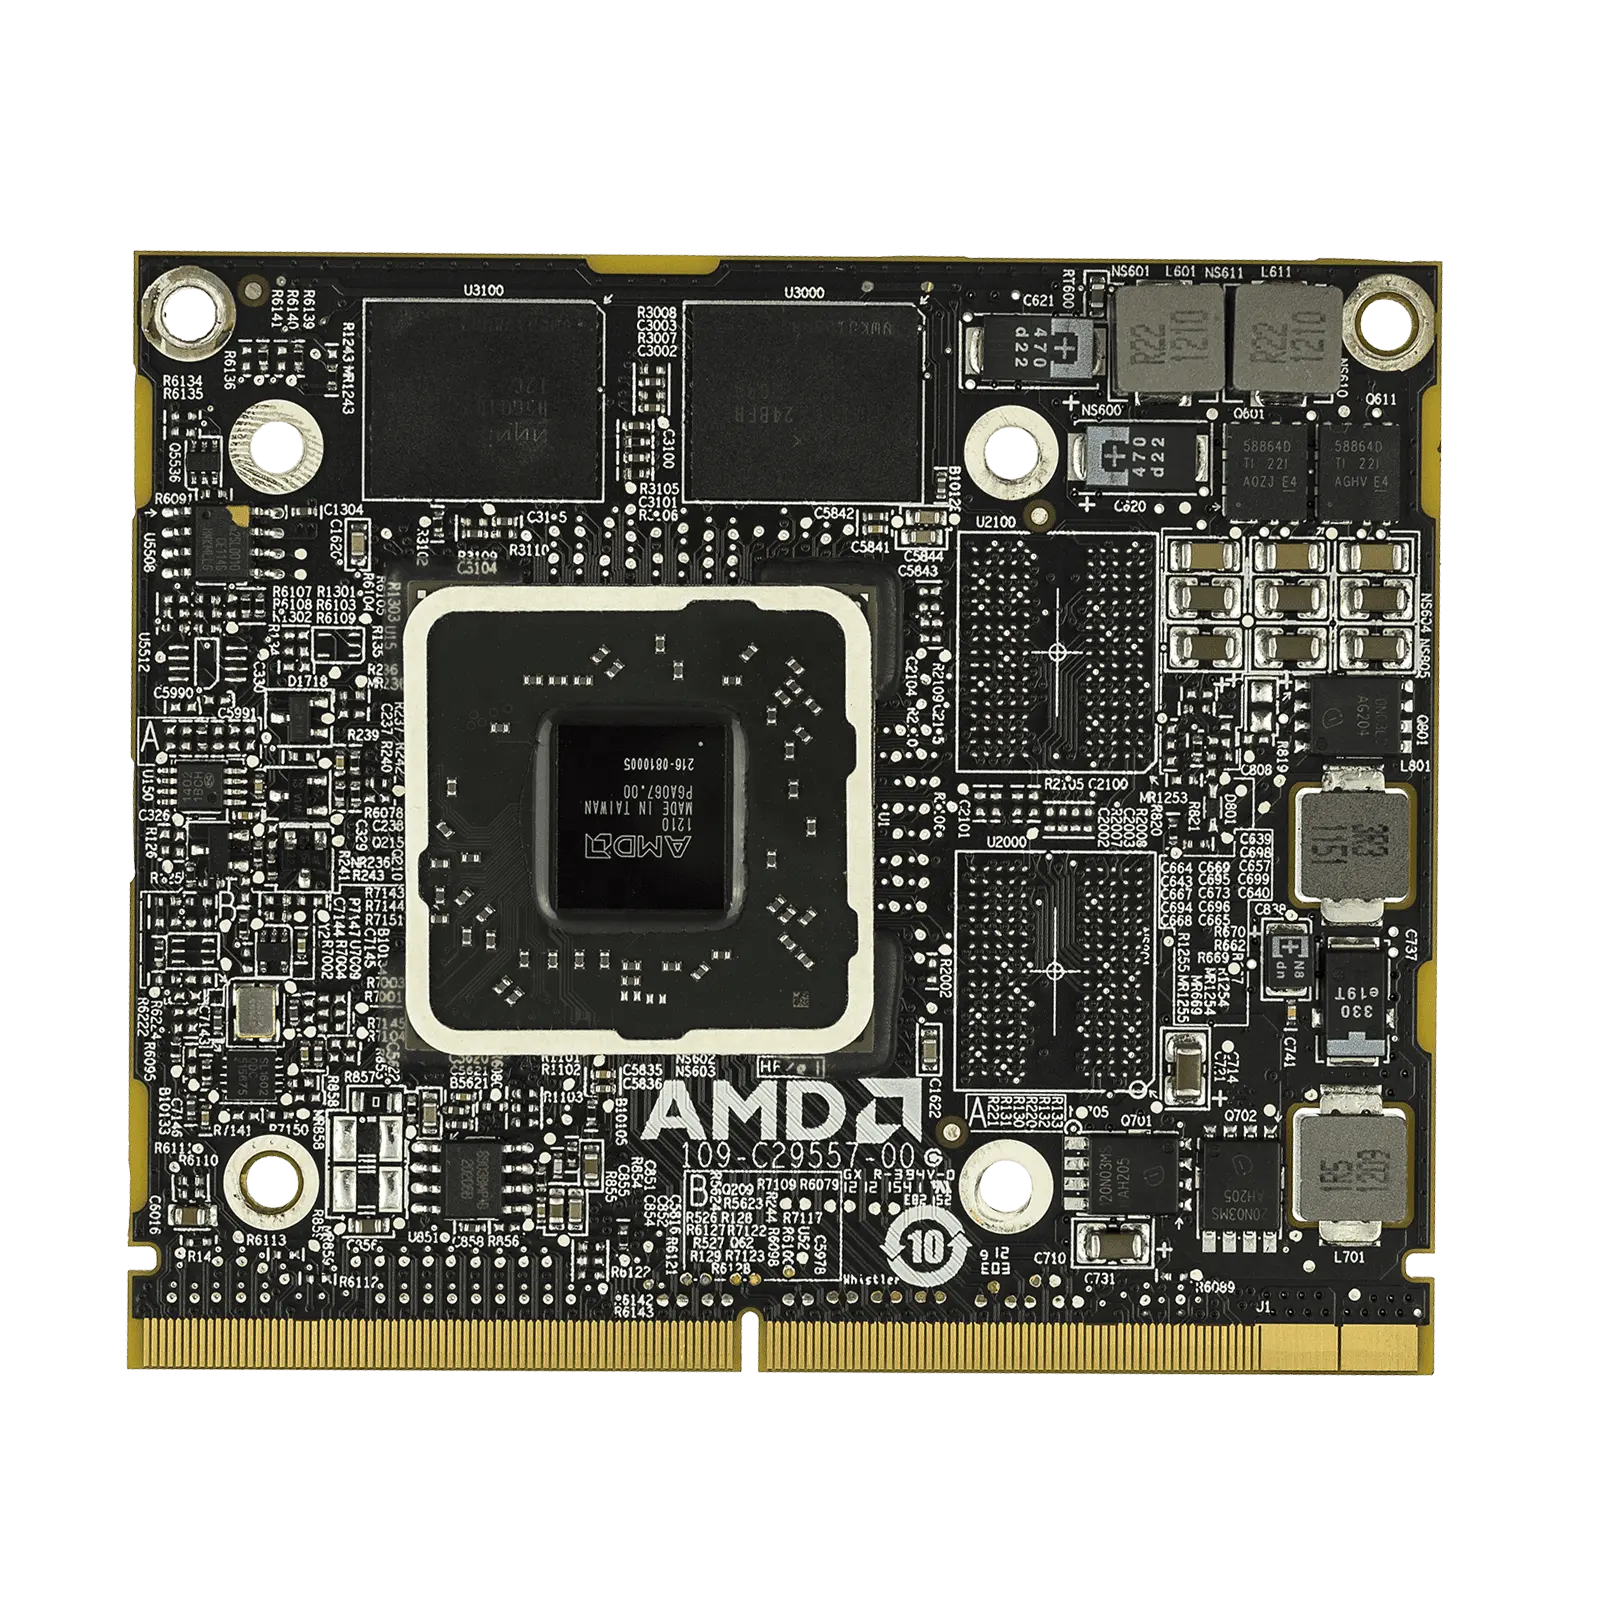 IMac 6750 "A1311 256 EMC2428 21.5-2011 용 661 MB 비디오 그래픽 카드로 원래 테스트 된 Radeon HD 6023 M